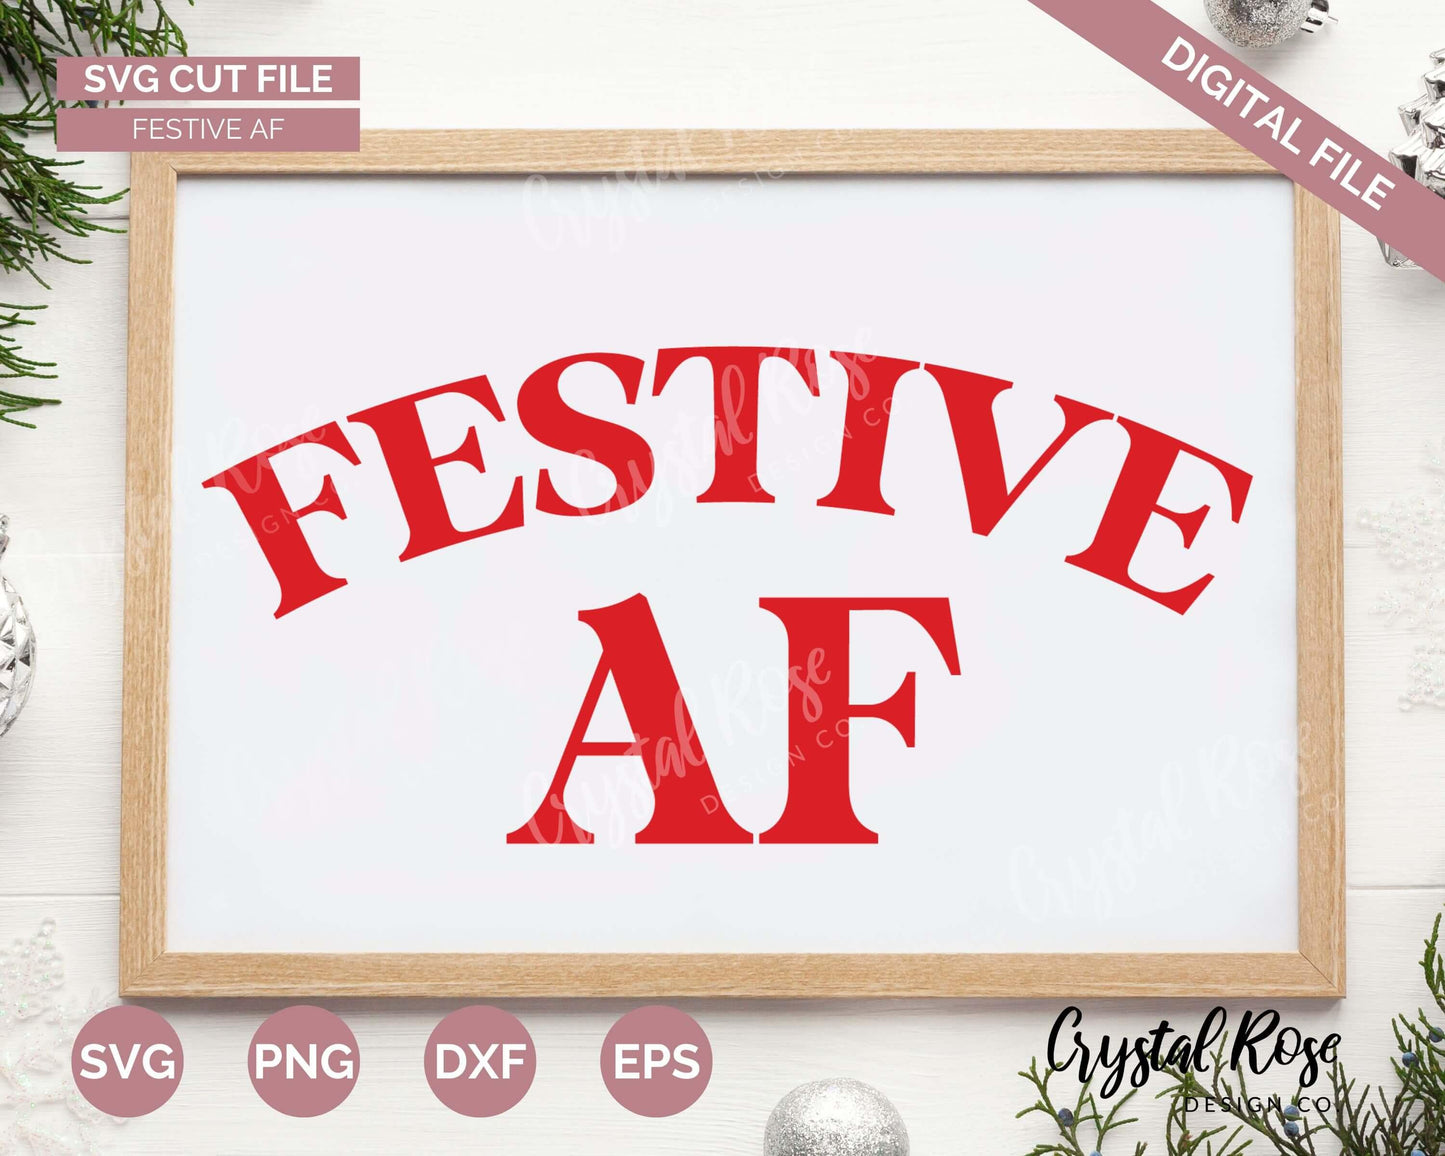 Festive AF SVG, Digital Download, Cricut, Silhouette, Glowforge (includes svg/png/dxf/eps)